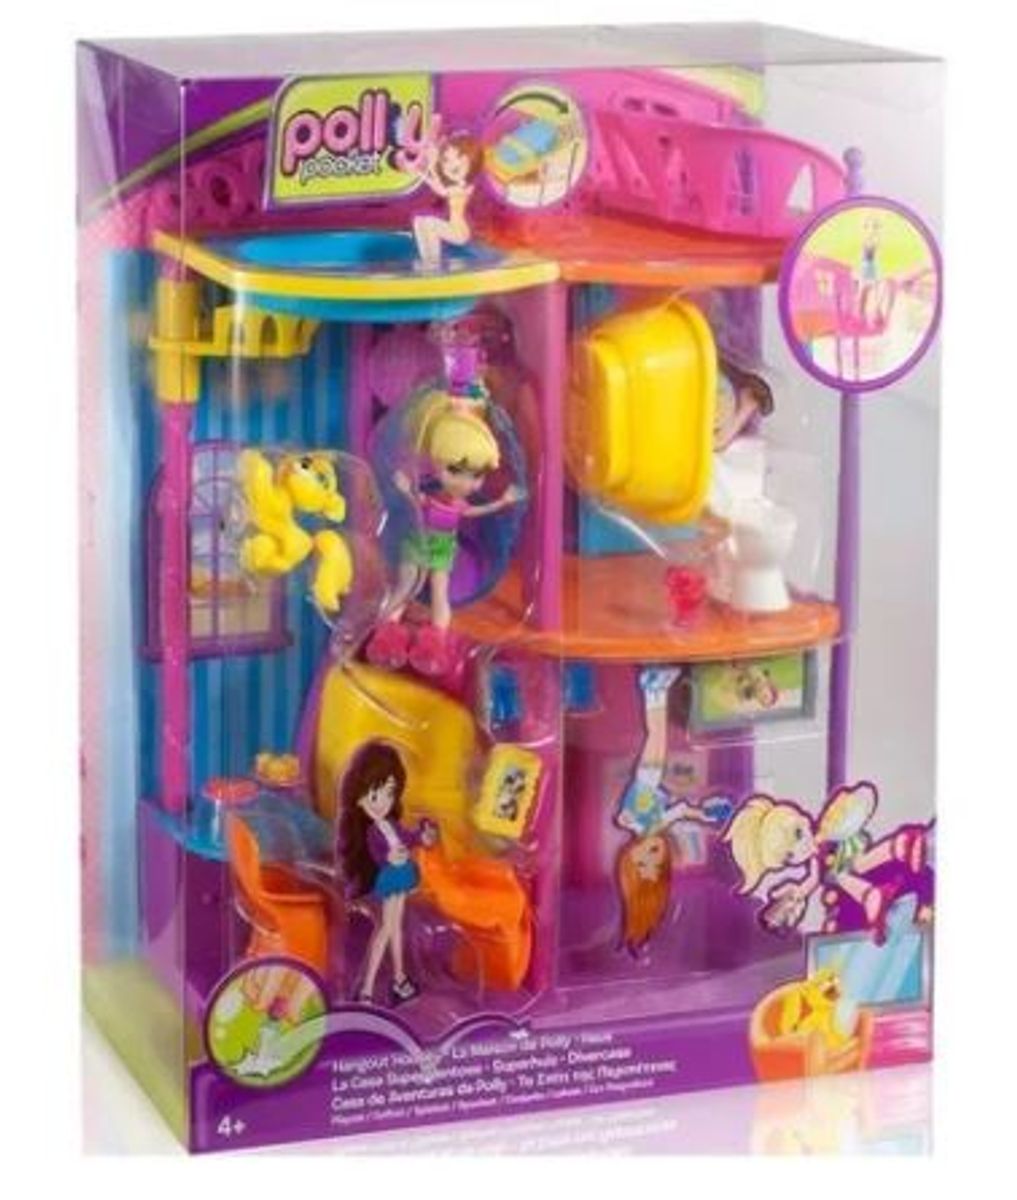 Boneca Polly Pocket - Sala de Jogos Cola e Descola - Mattel Usado